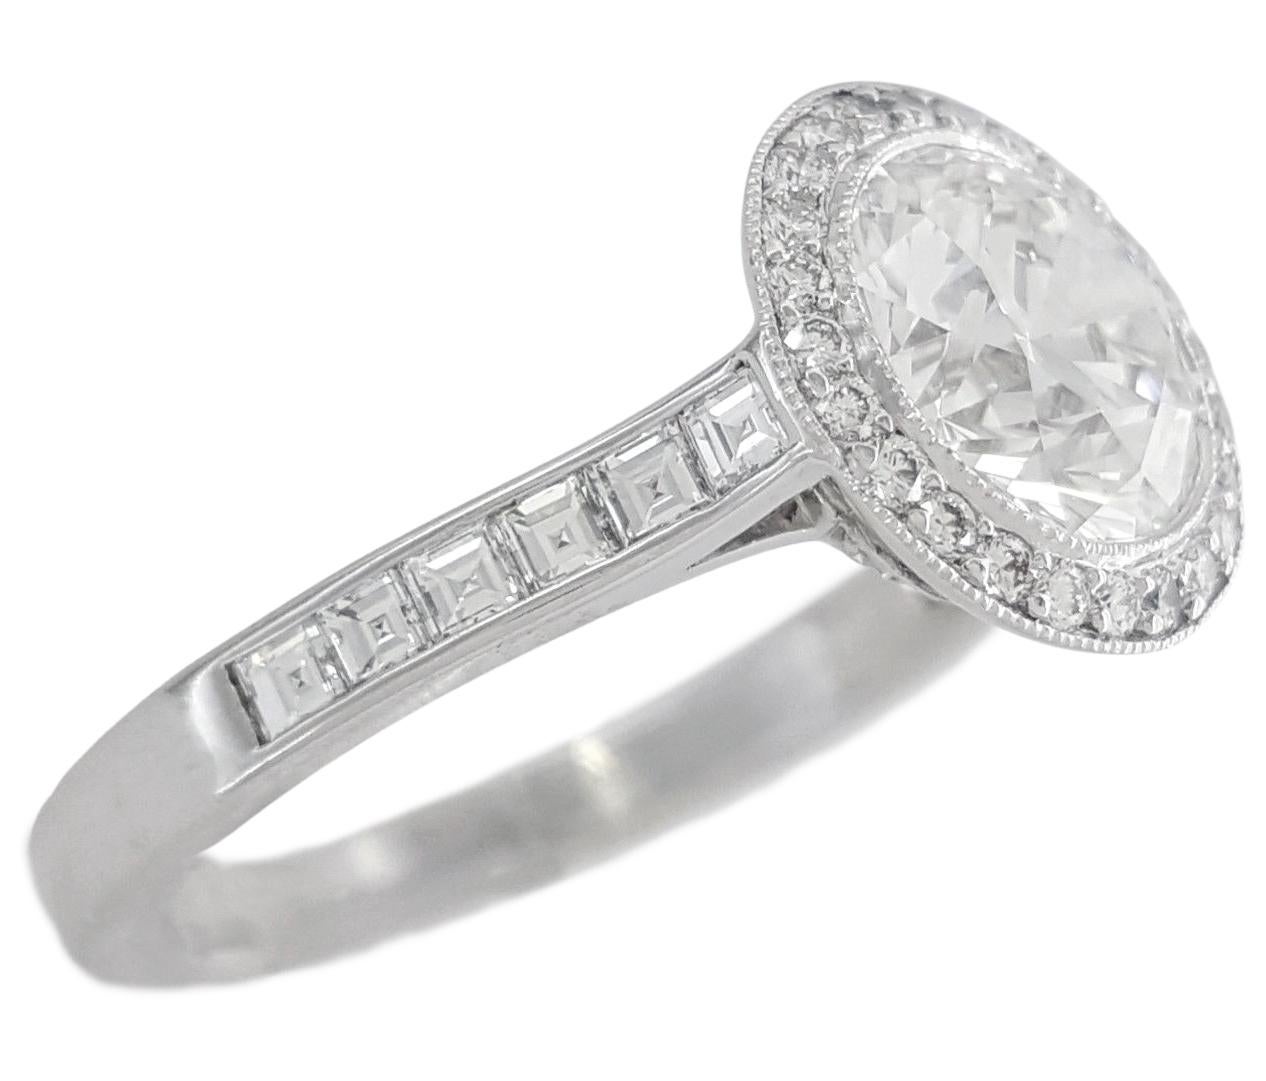 Tiffany & Co. Platinum Soleste® 1.20 carat Round Diamond Halo Engagement Ring.
